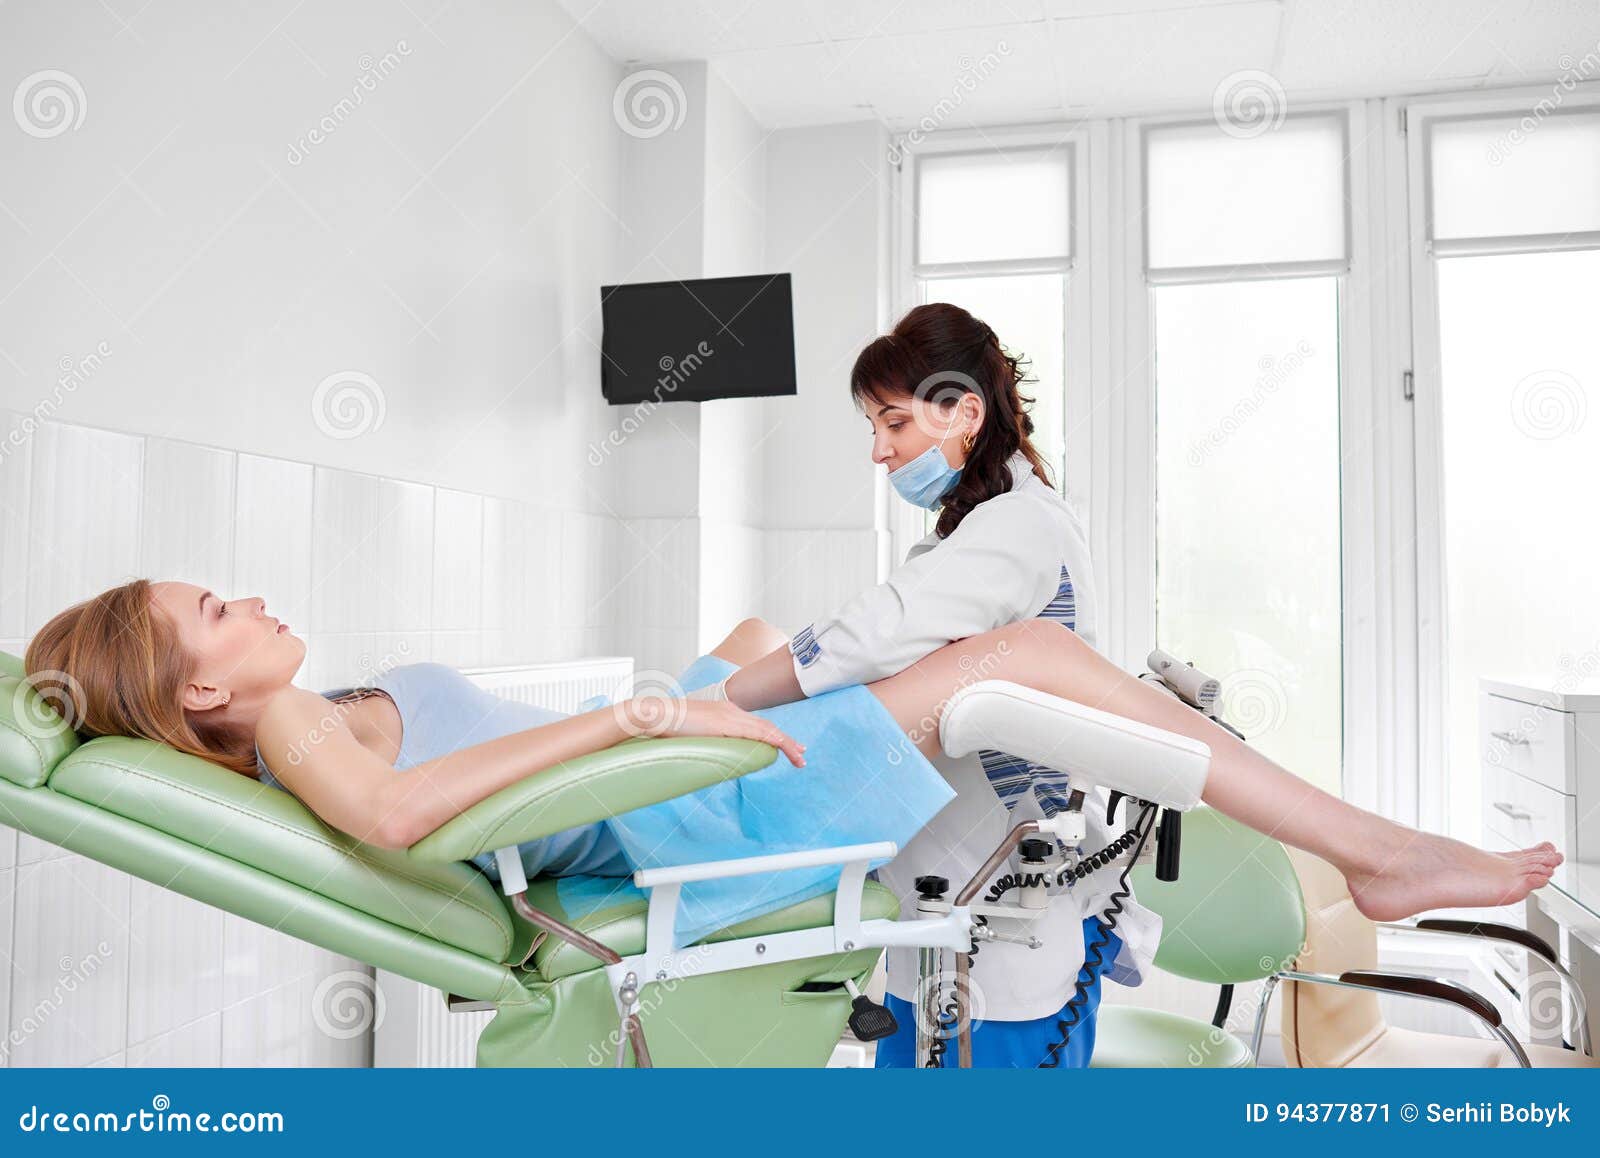 Professional Gynecologist Examining Her Patient Stock Image Image Of Medicine Coat 94377871